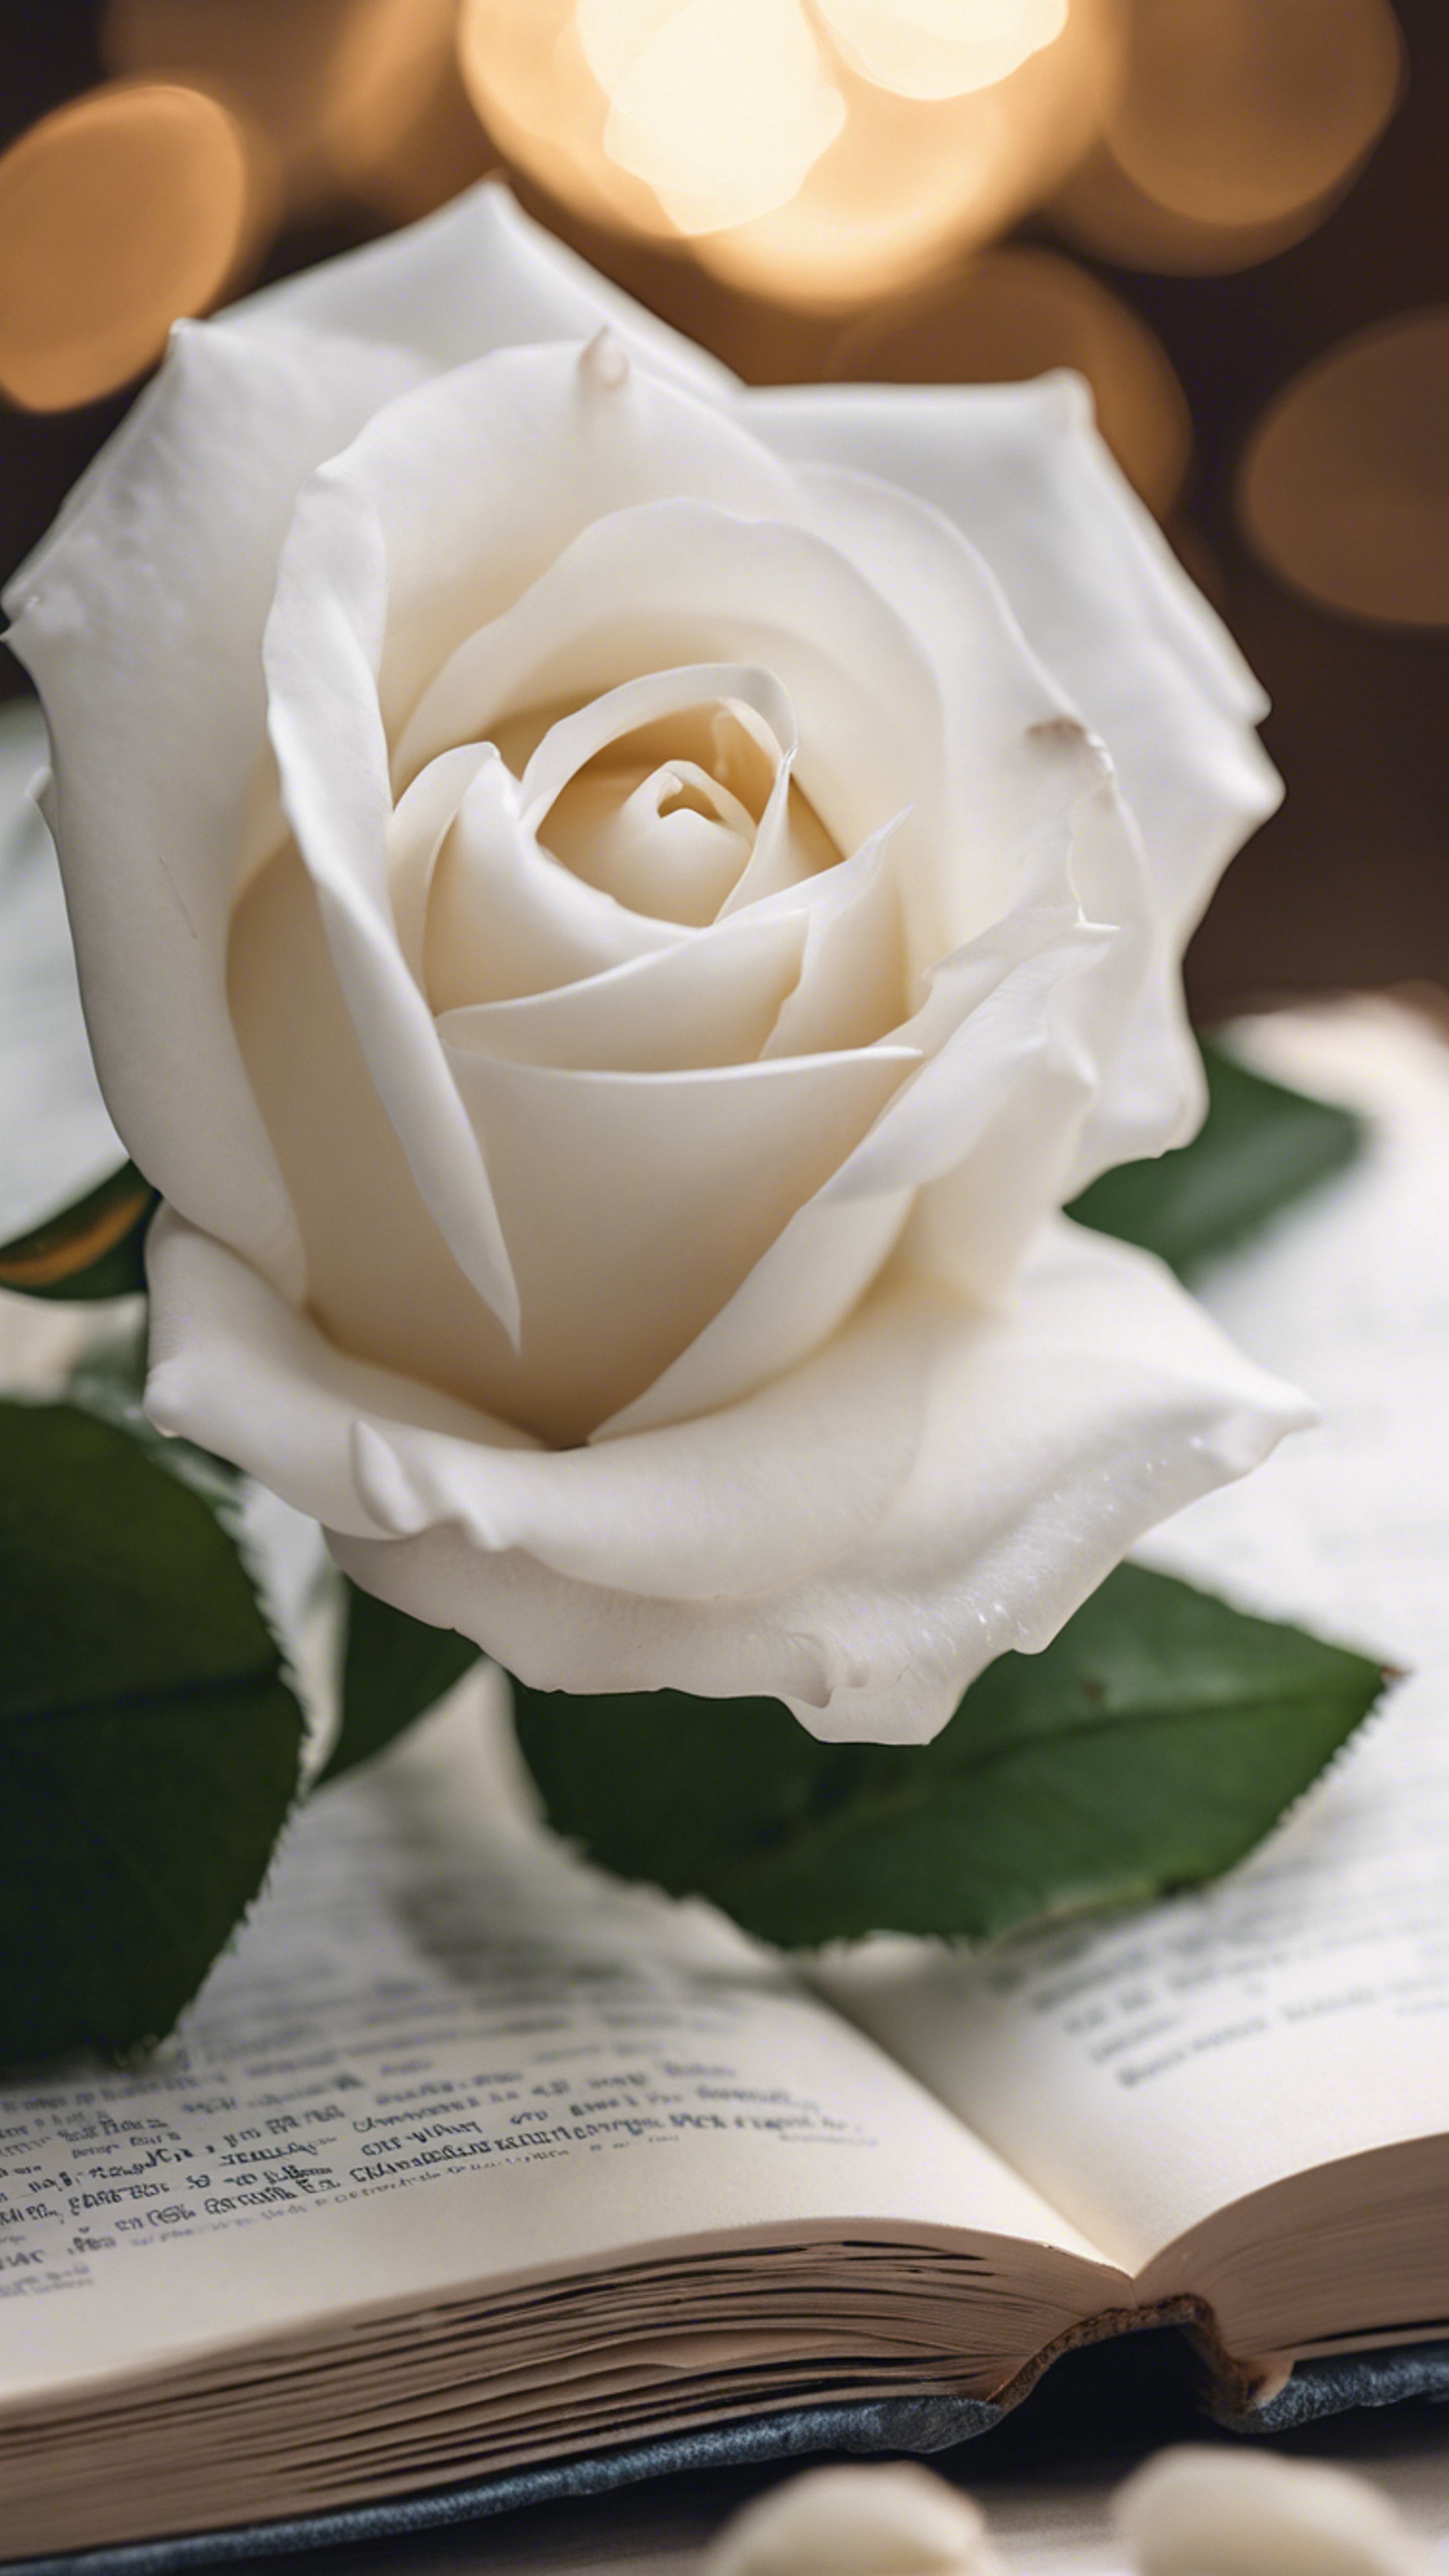 A serene white rose perched on an open hardcover book. Tapeta na zeď[5eeaaa5d95634df1b3fb]